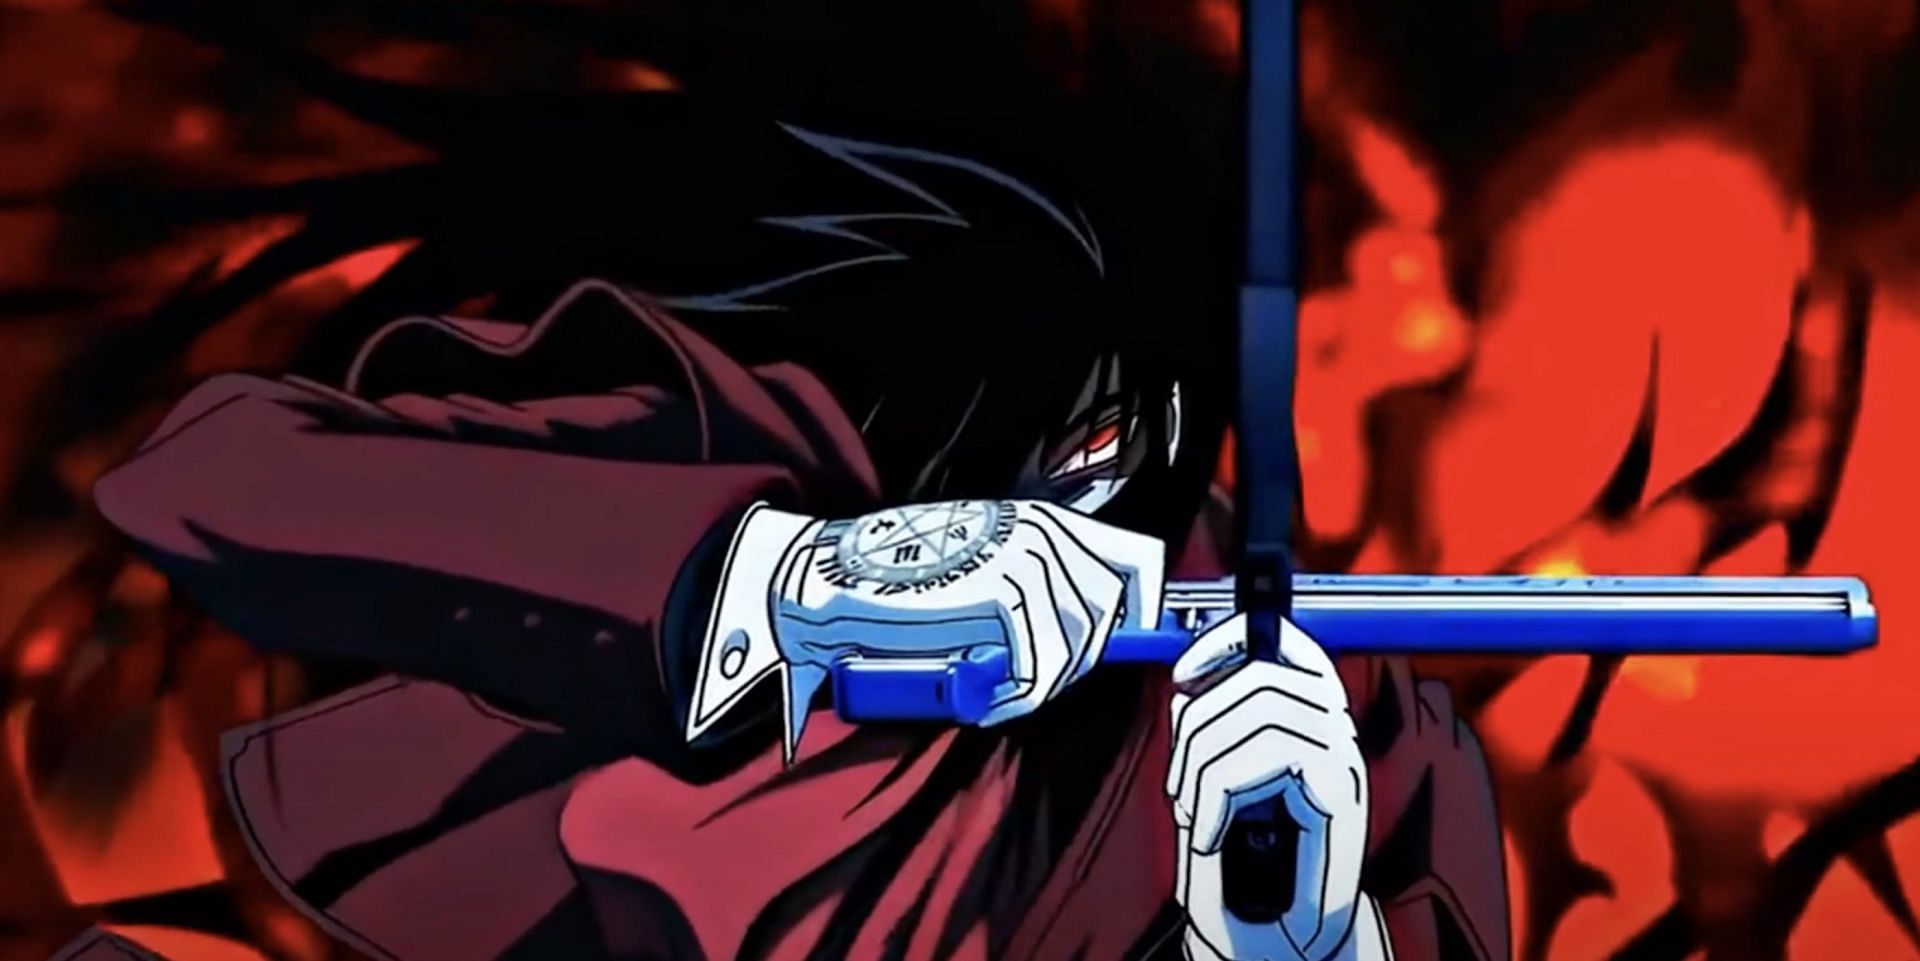 Alucard as seen in anime (Image via Studio Gonzo)